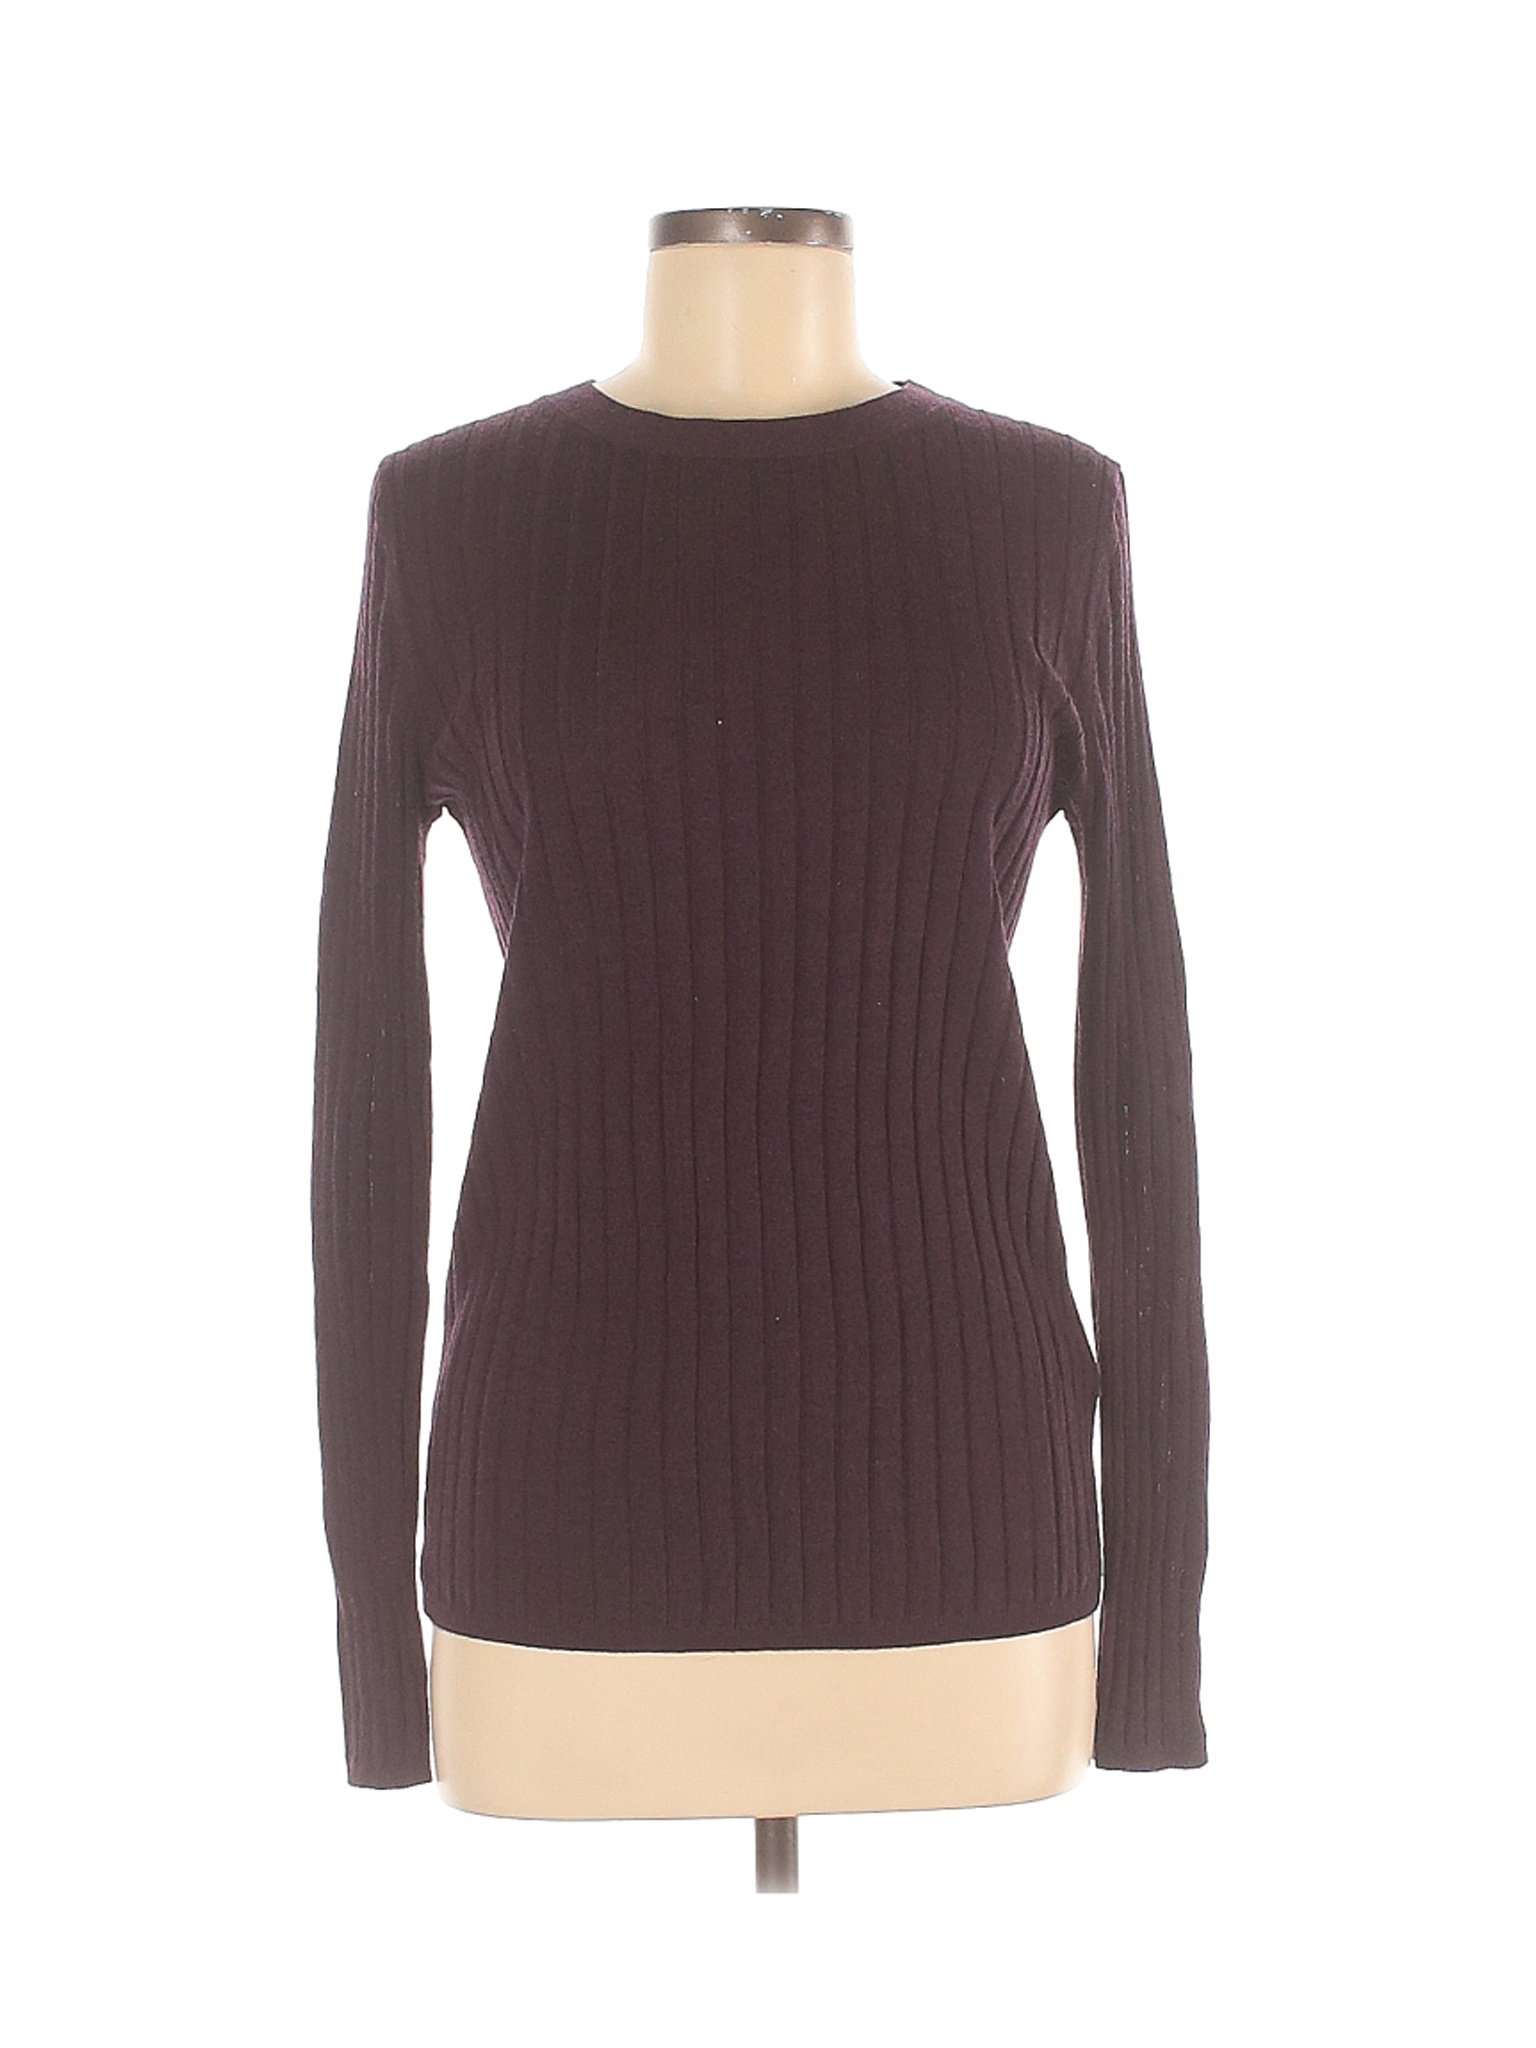 NWT Banana Republic Women Brown Wool Pullover Sweater M | eBay